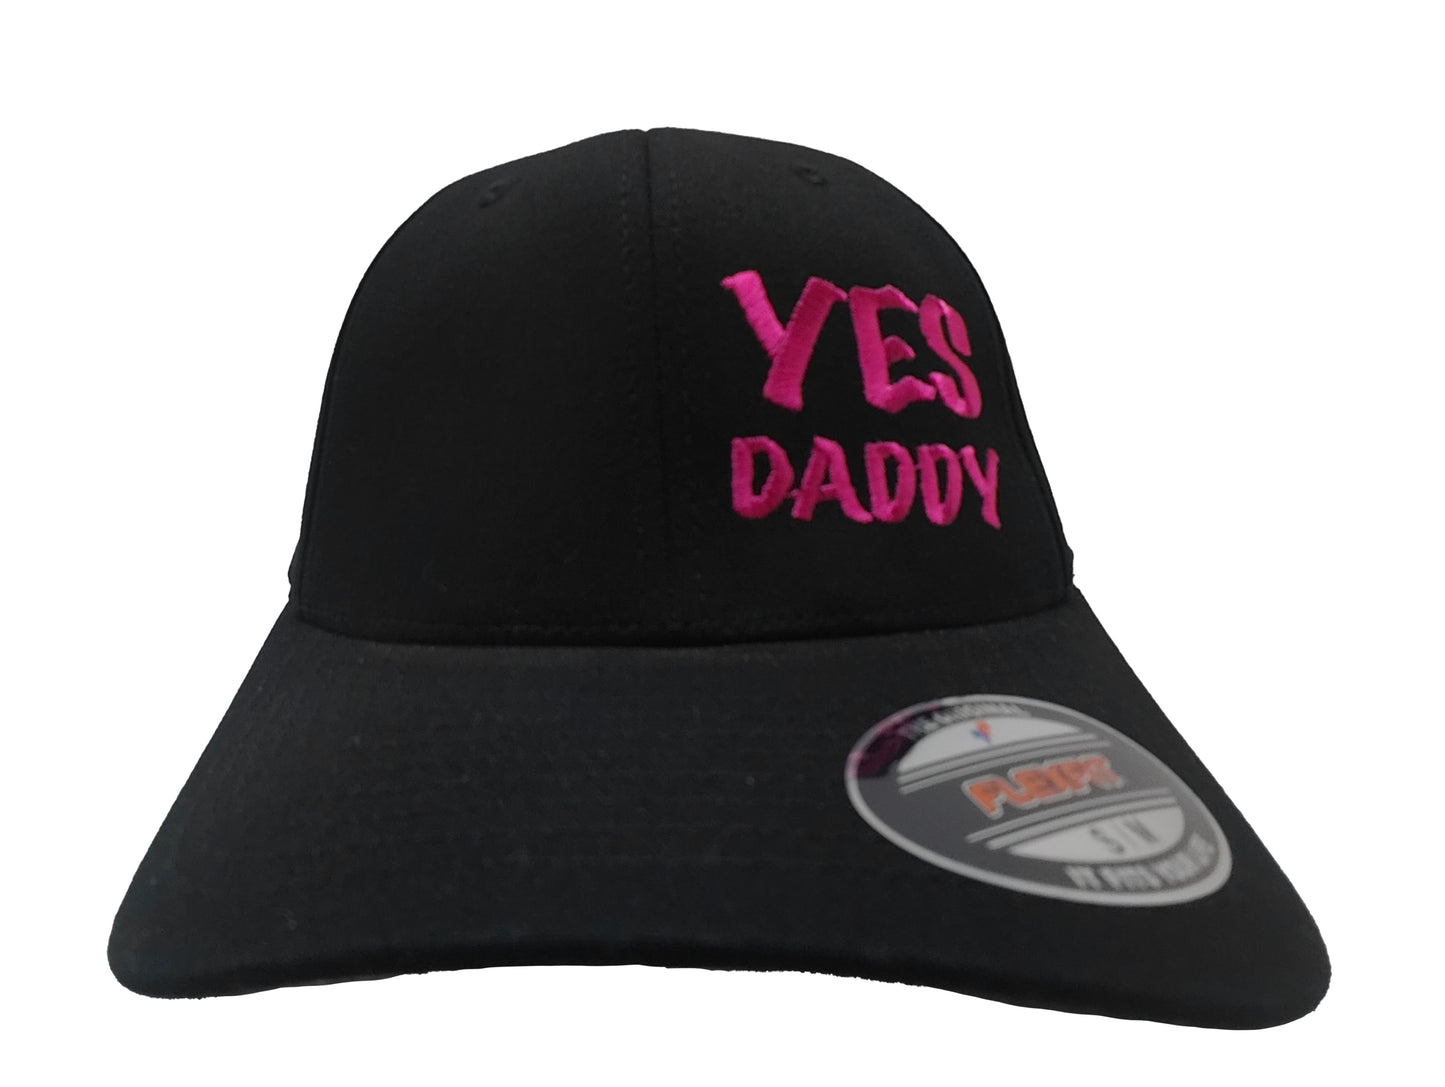 YES DADDY FlexFit Adult Hat Black / Pink